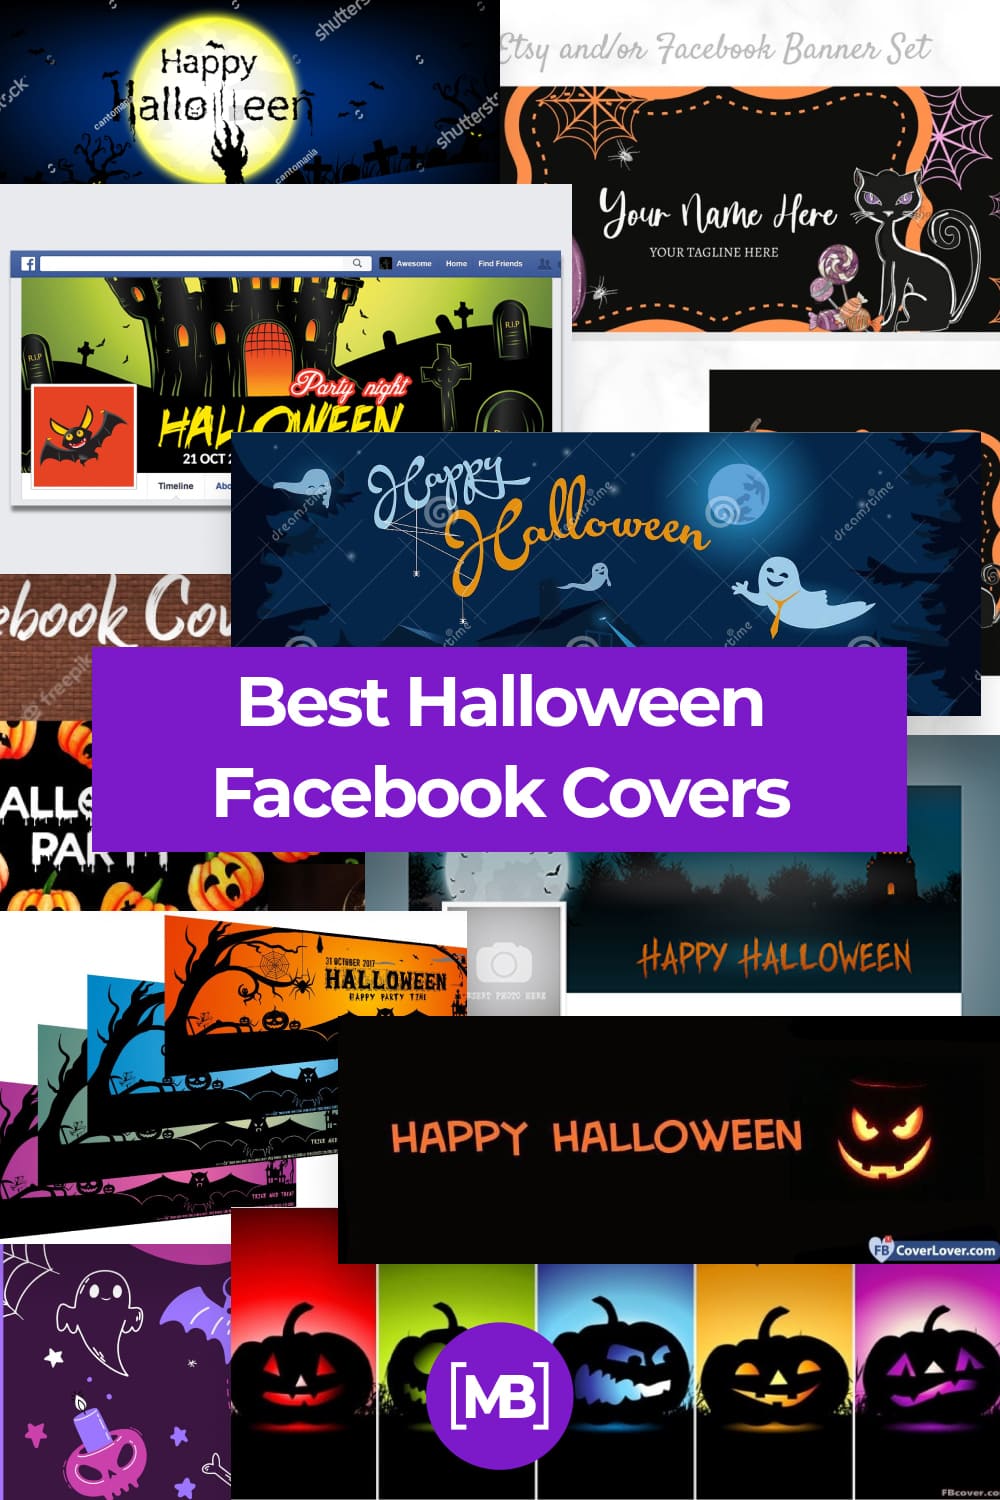 Best Halloween Facebook Covers Pinterest.